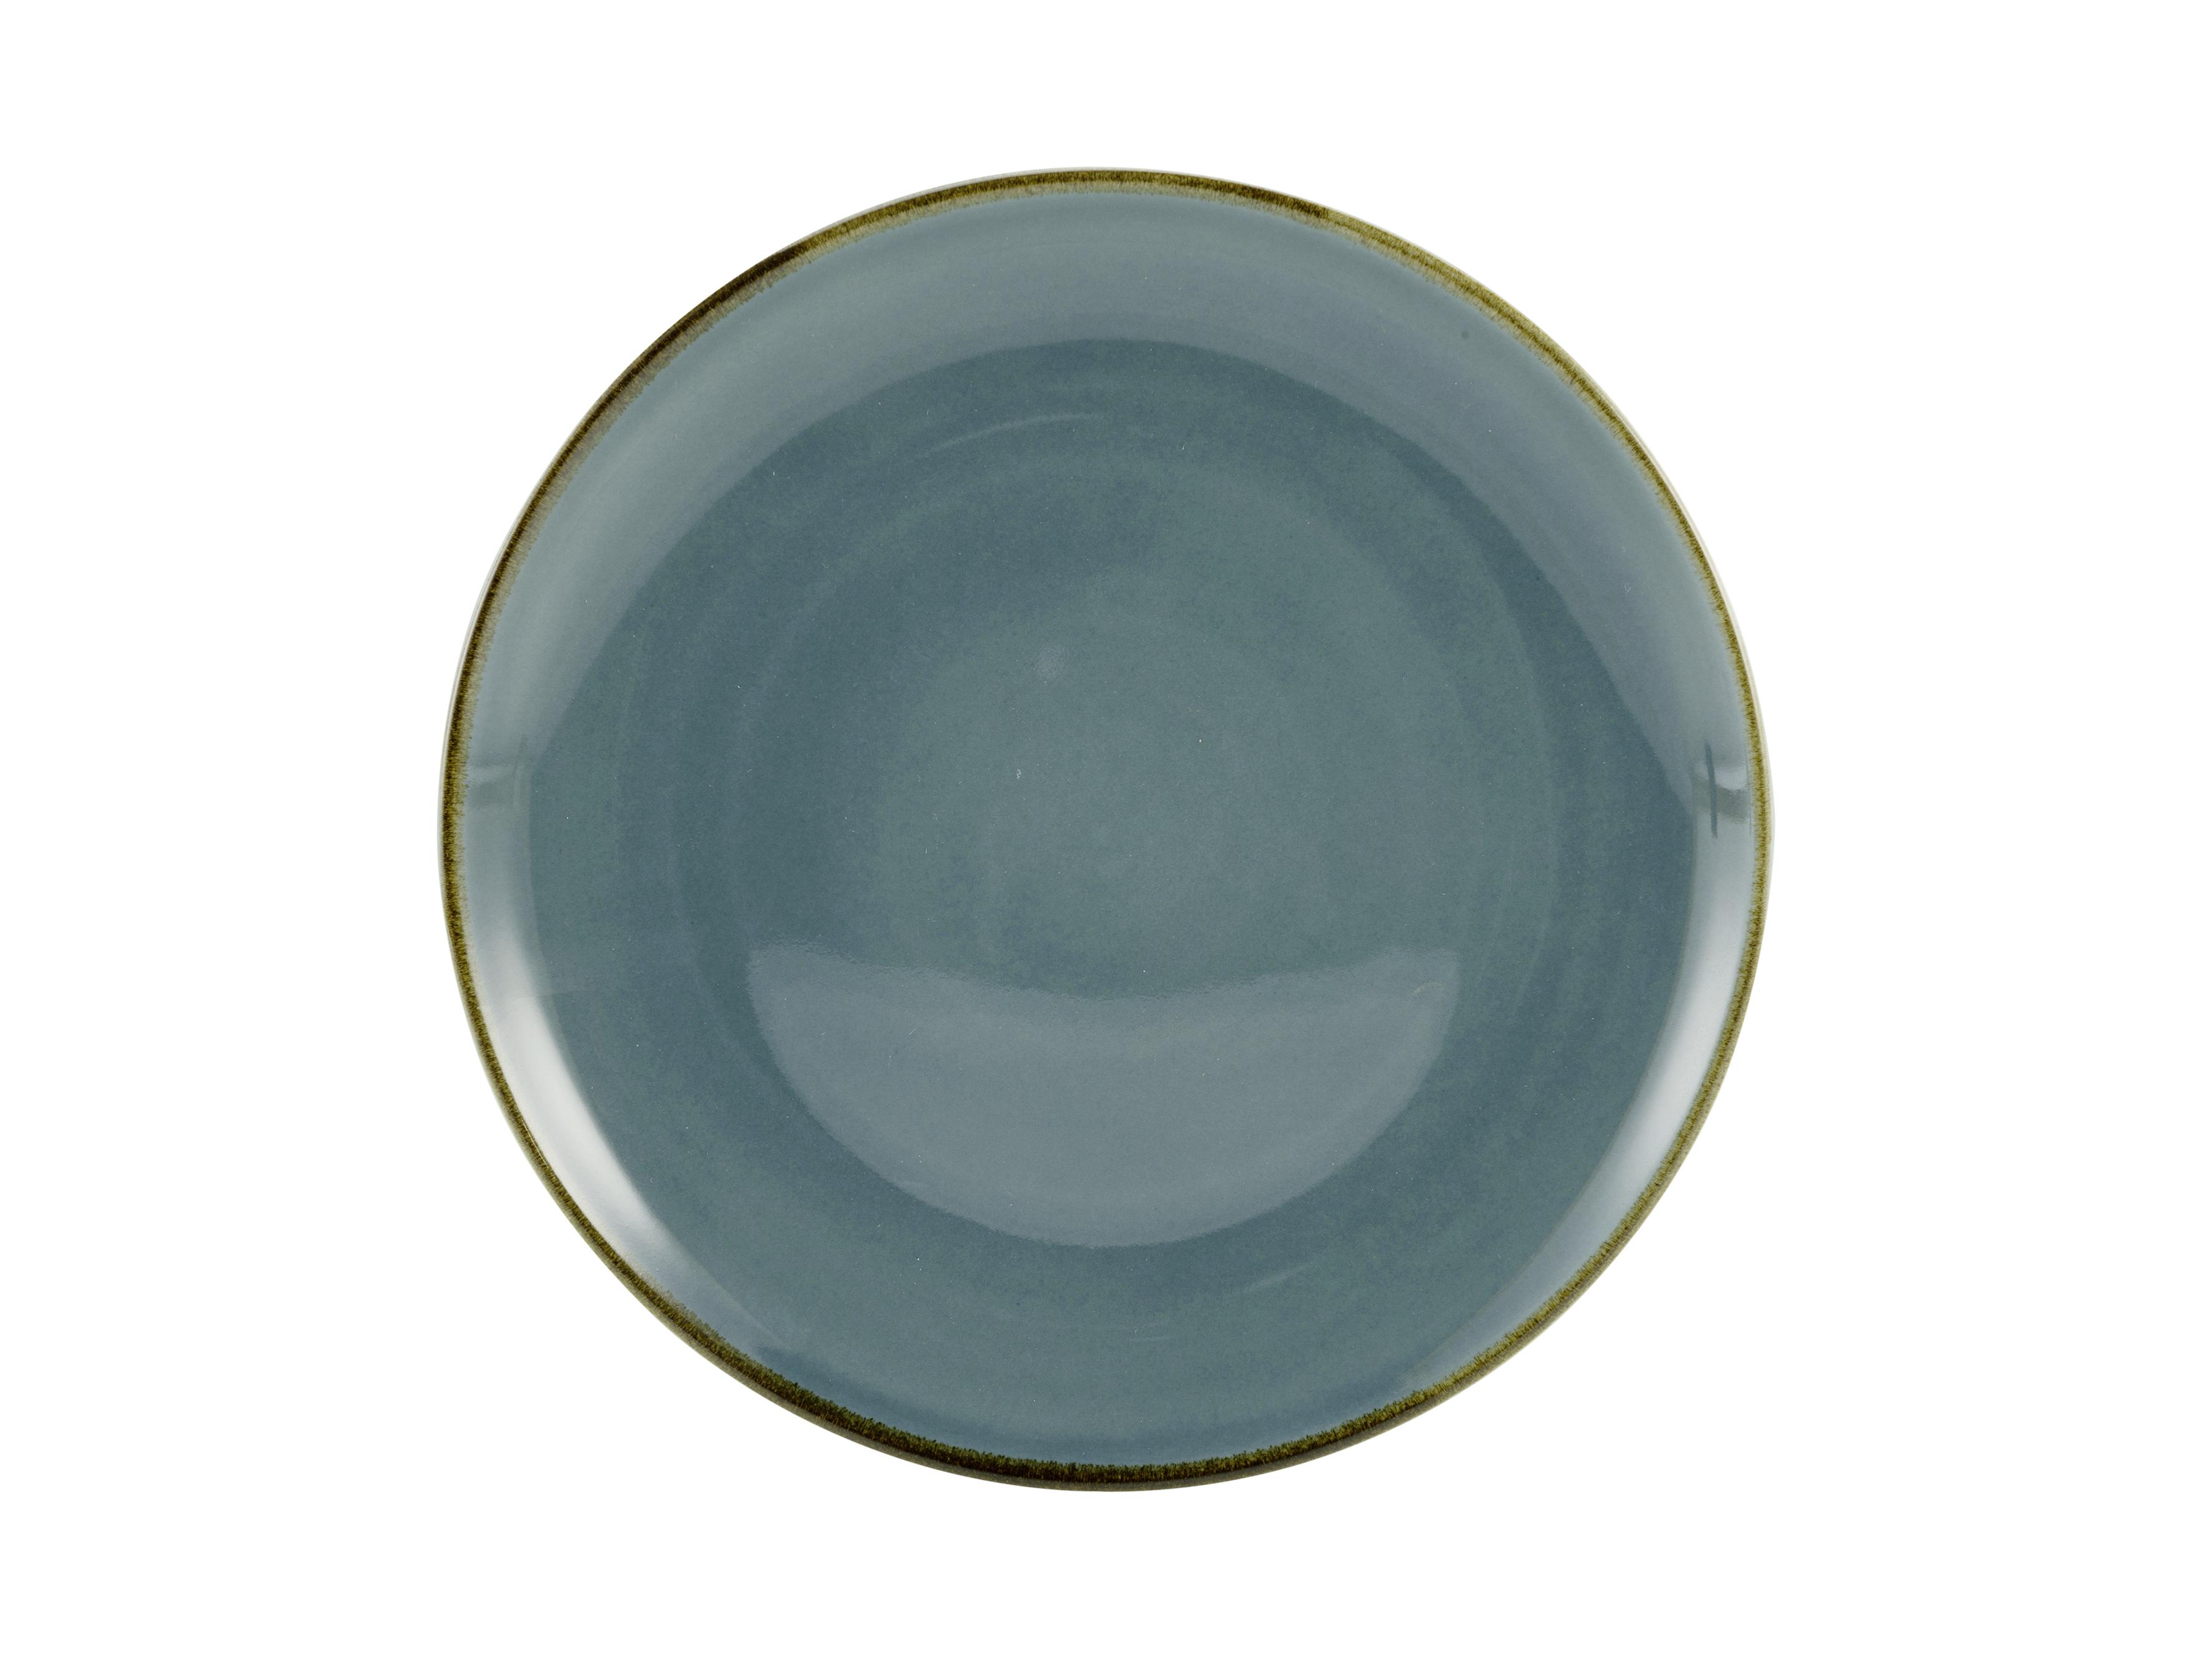 TALERZ DESEROWY LINEN - niebieski, ceramika (22/22/2,5cm) - Premium Living